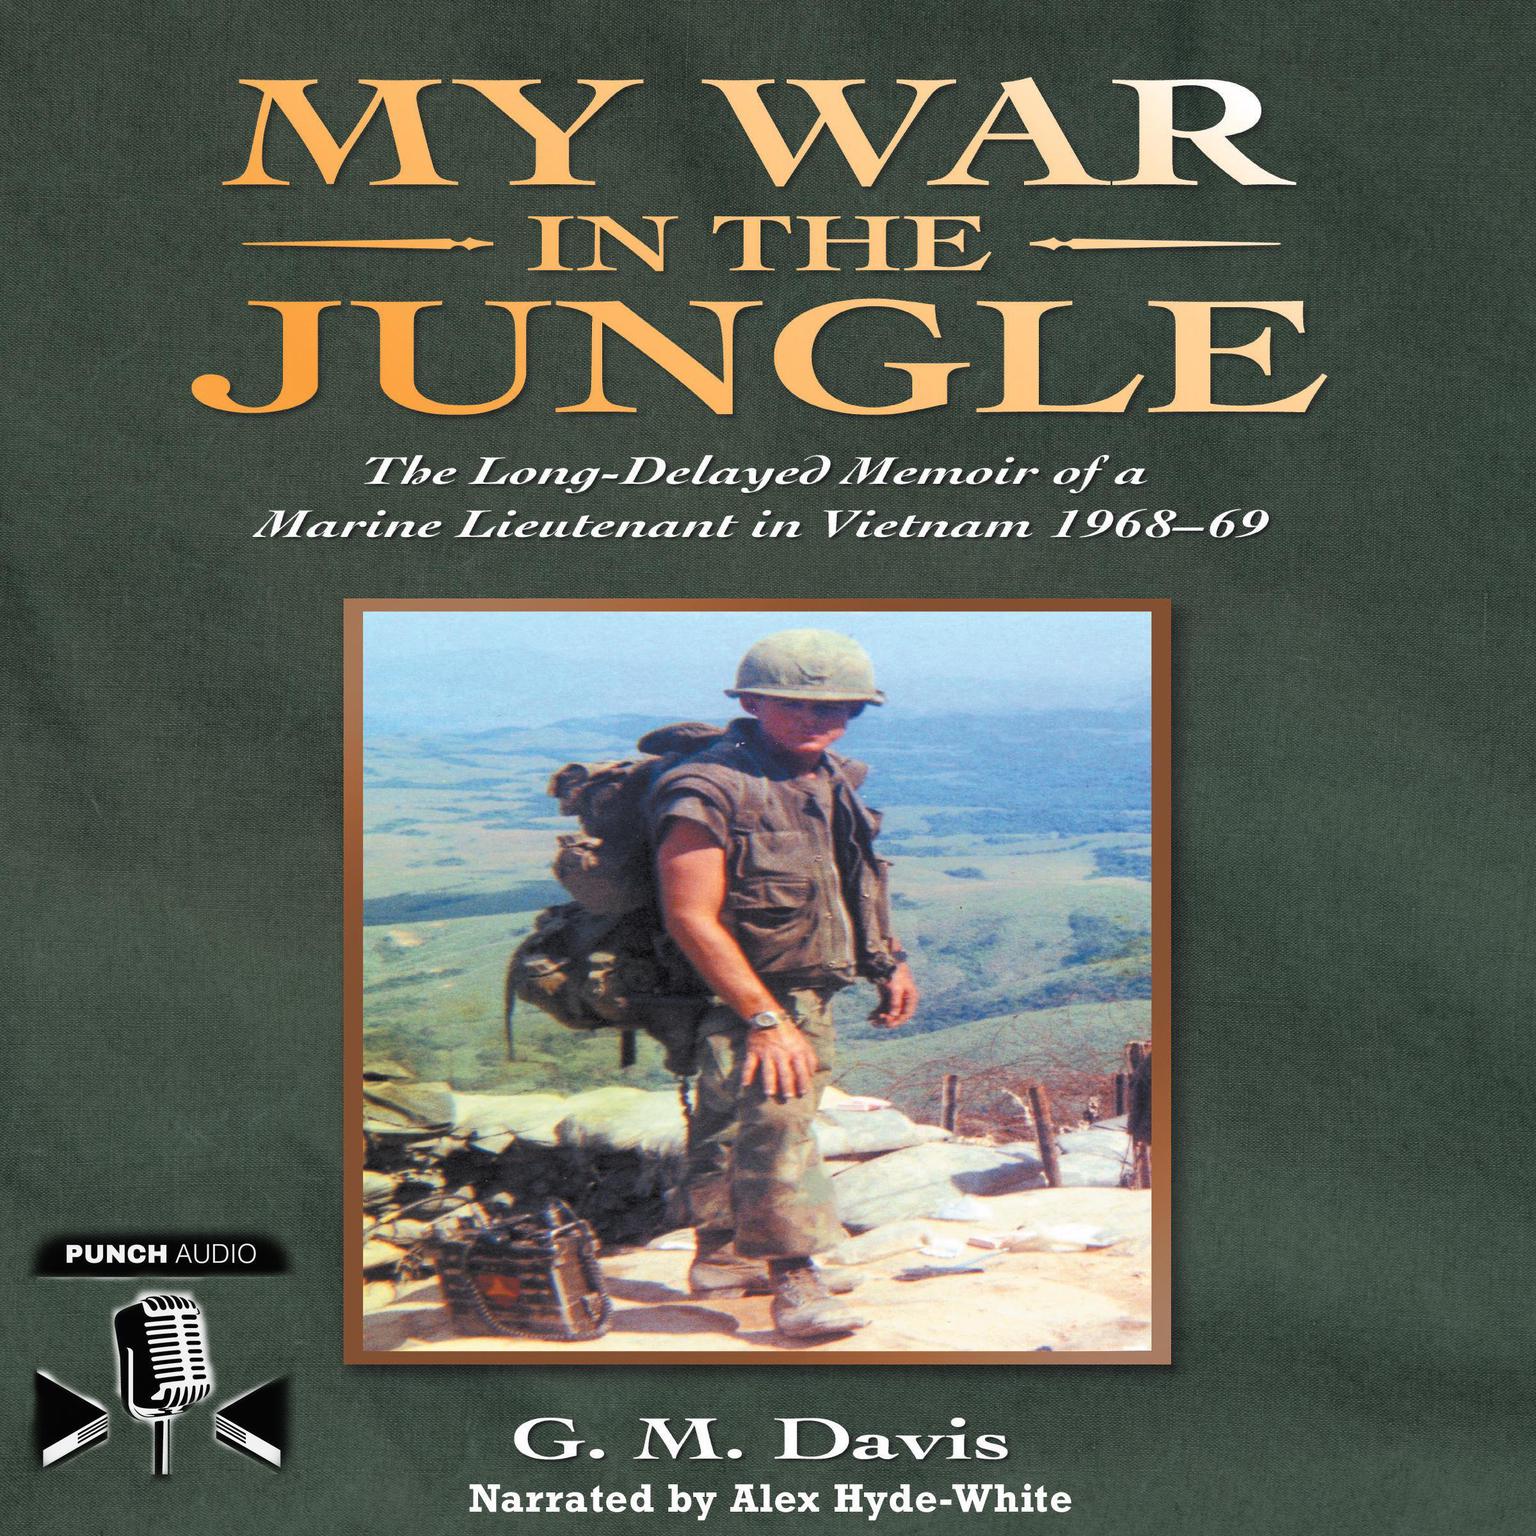 My War In The Jungle: The Long-Delayed Memoir of a Marine Lieutenant in Vietnam 1968-69 Audiobook, by G.M. Davis